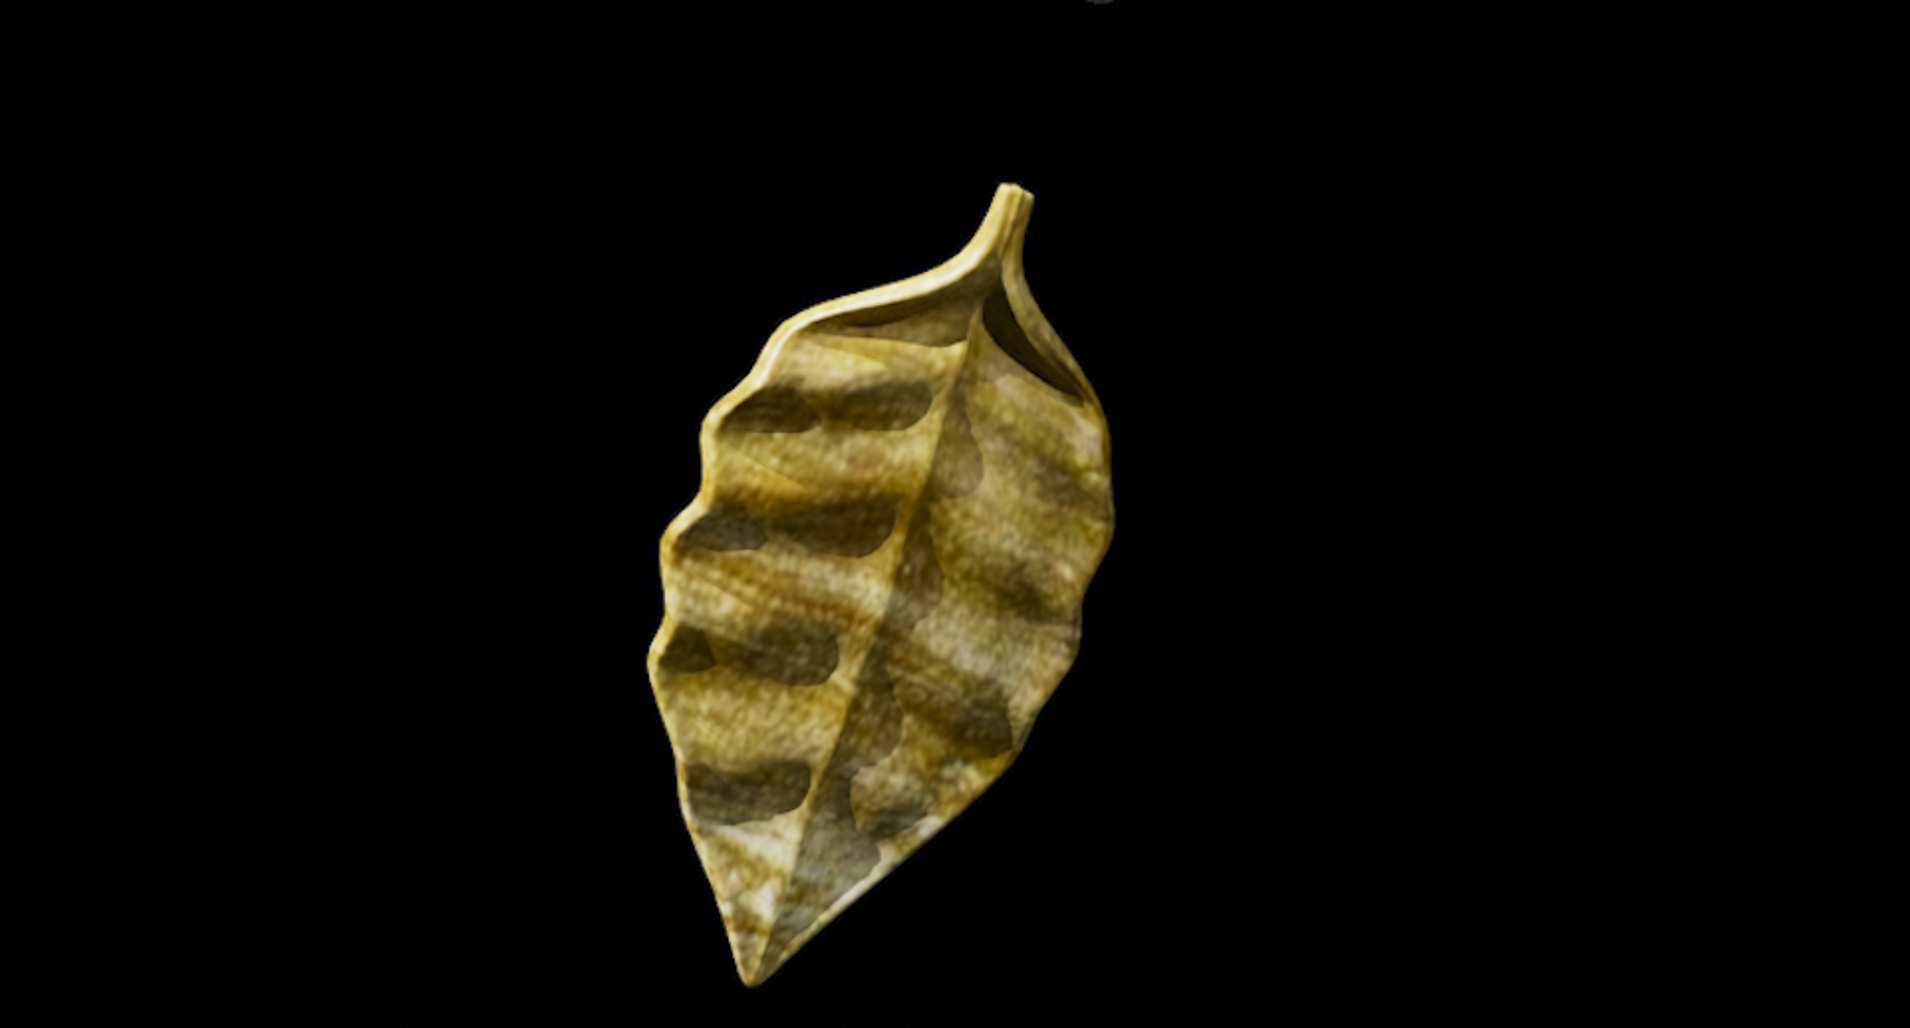 Still from a digital animation showing a leaf on a black backround